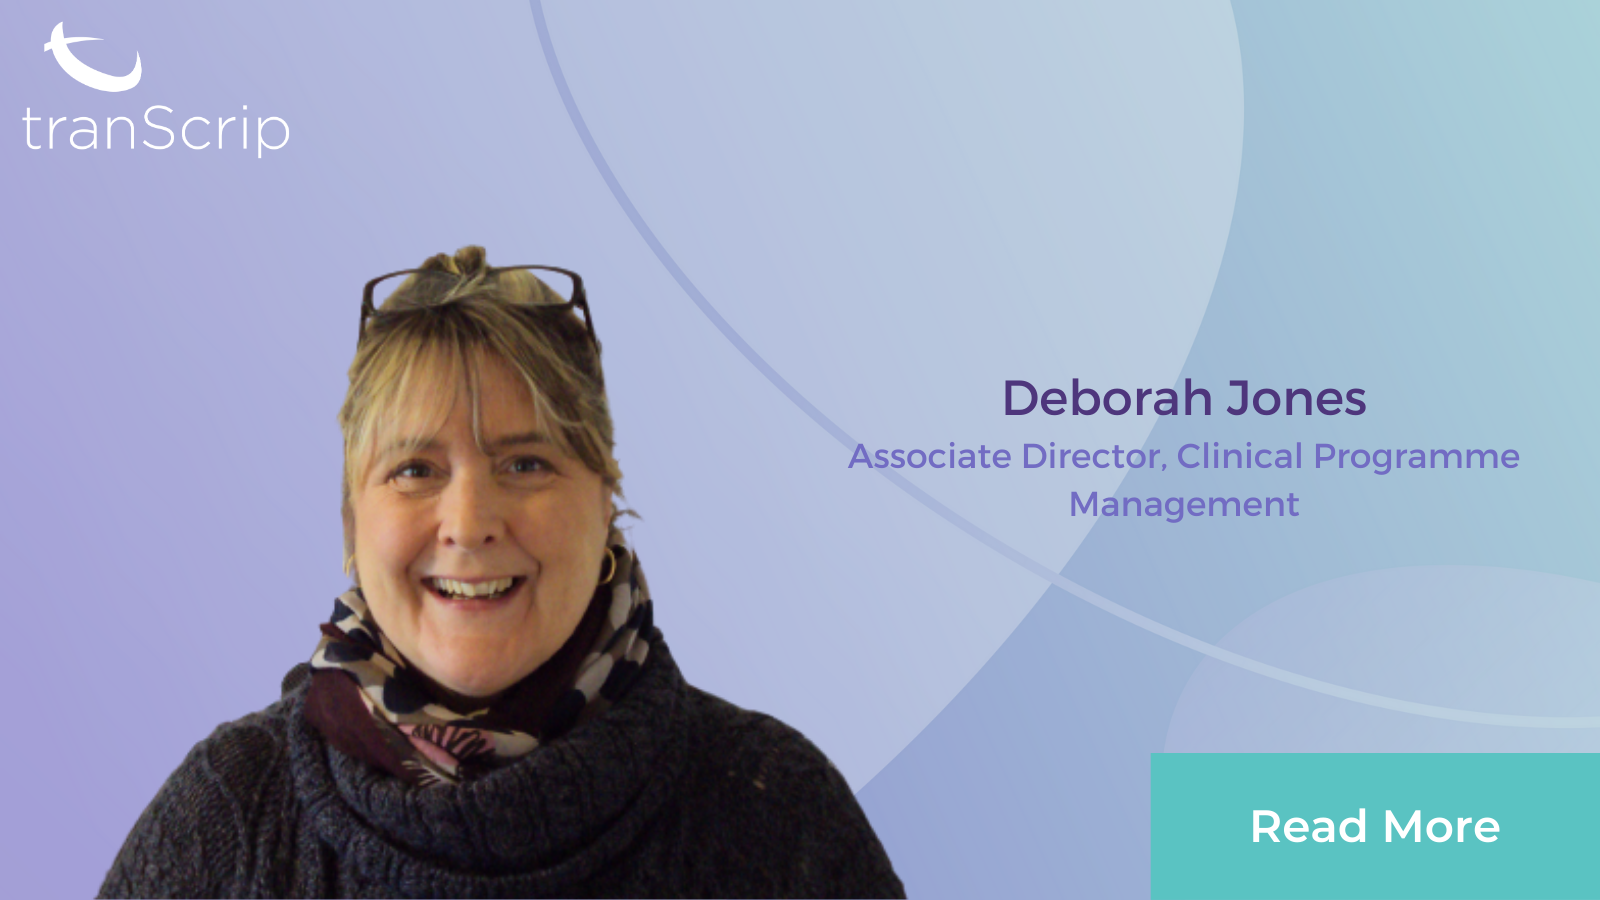 Deborah Jones joins tranScrip as Associate Director of Clinical Programme Management. Featured Image